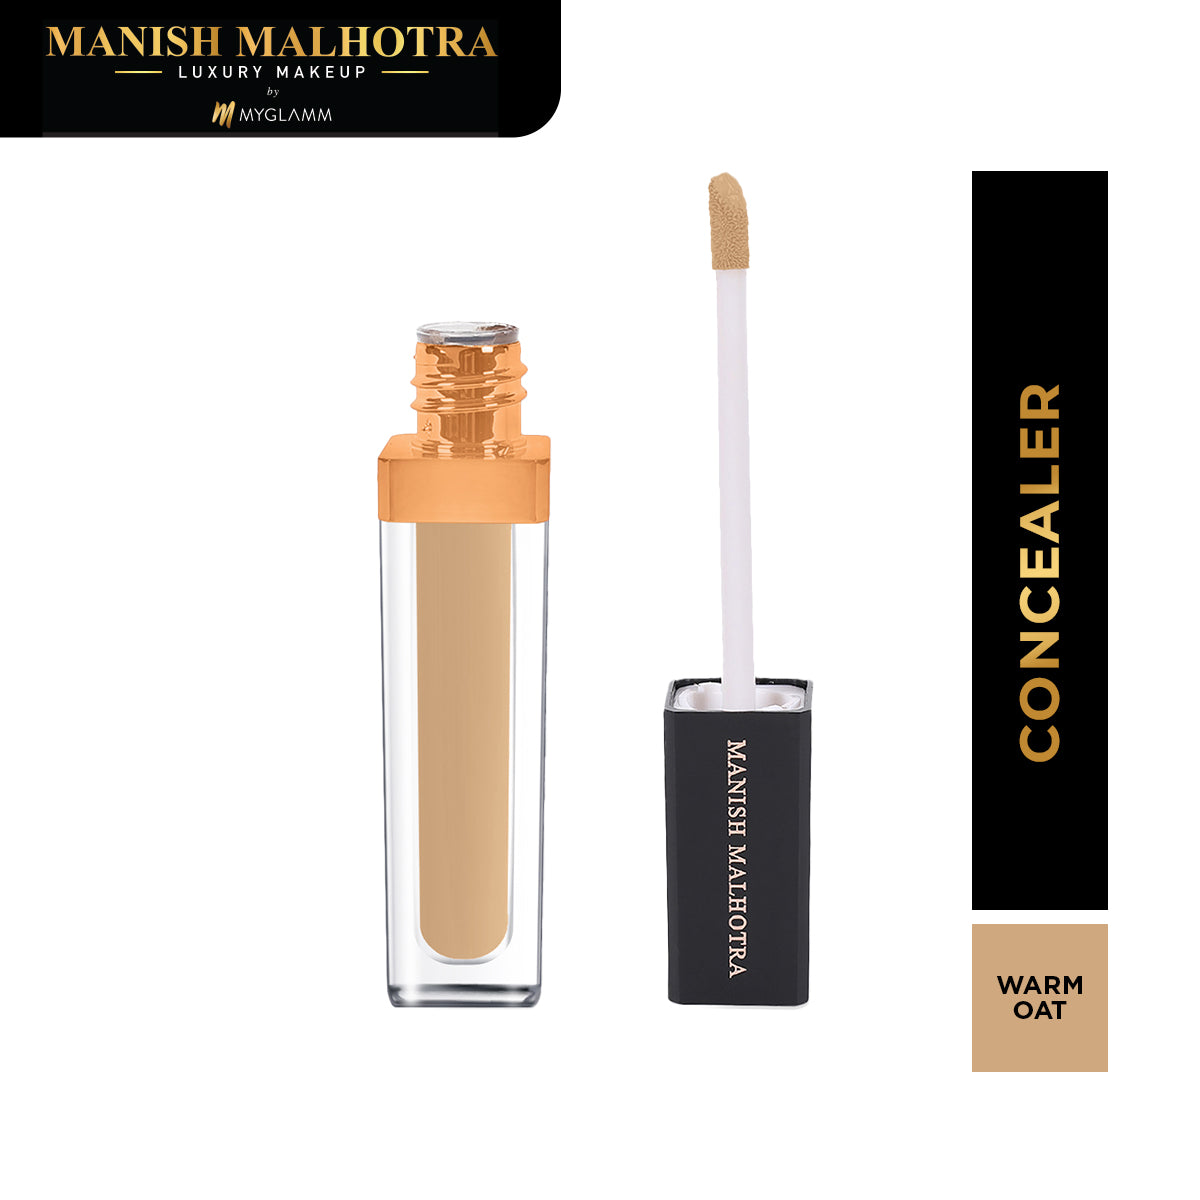 MyGlamm Manish Malhotra Beauty Skin Awakening Concealer-Warm Oat-7gm